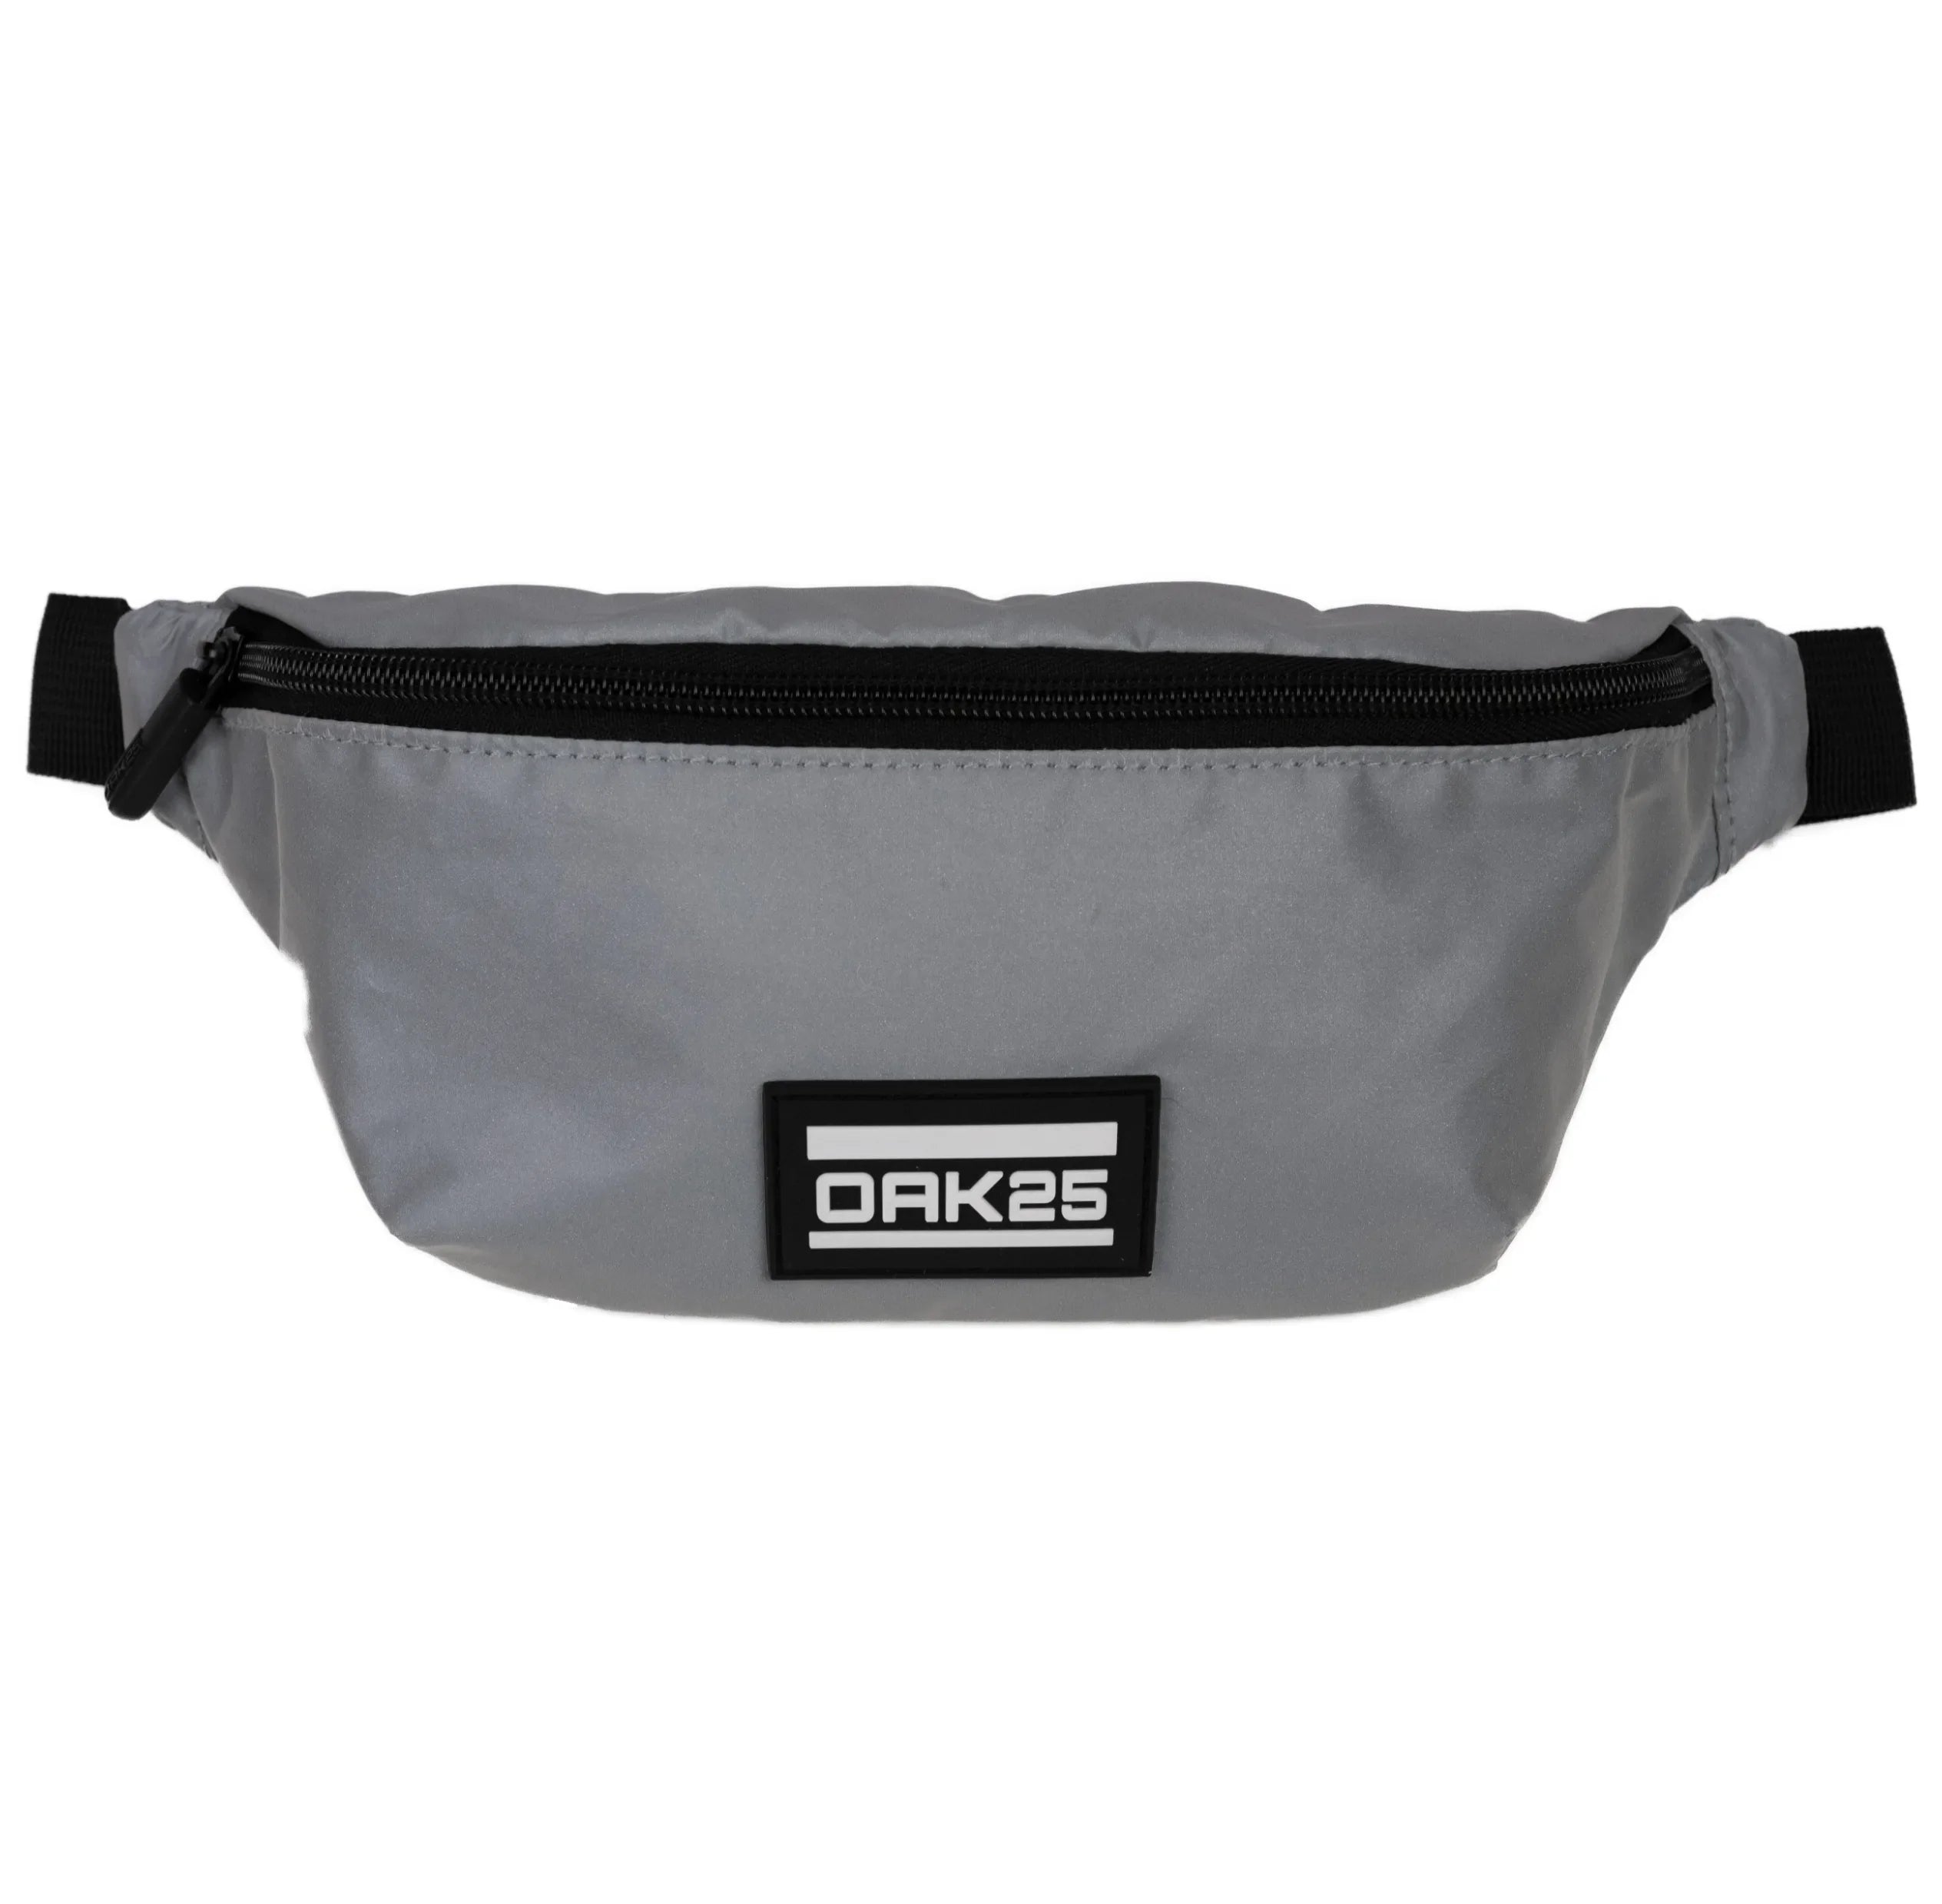 Oak25 Everyday Sling Reflective bum bag 28 cm - Grey